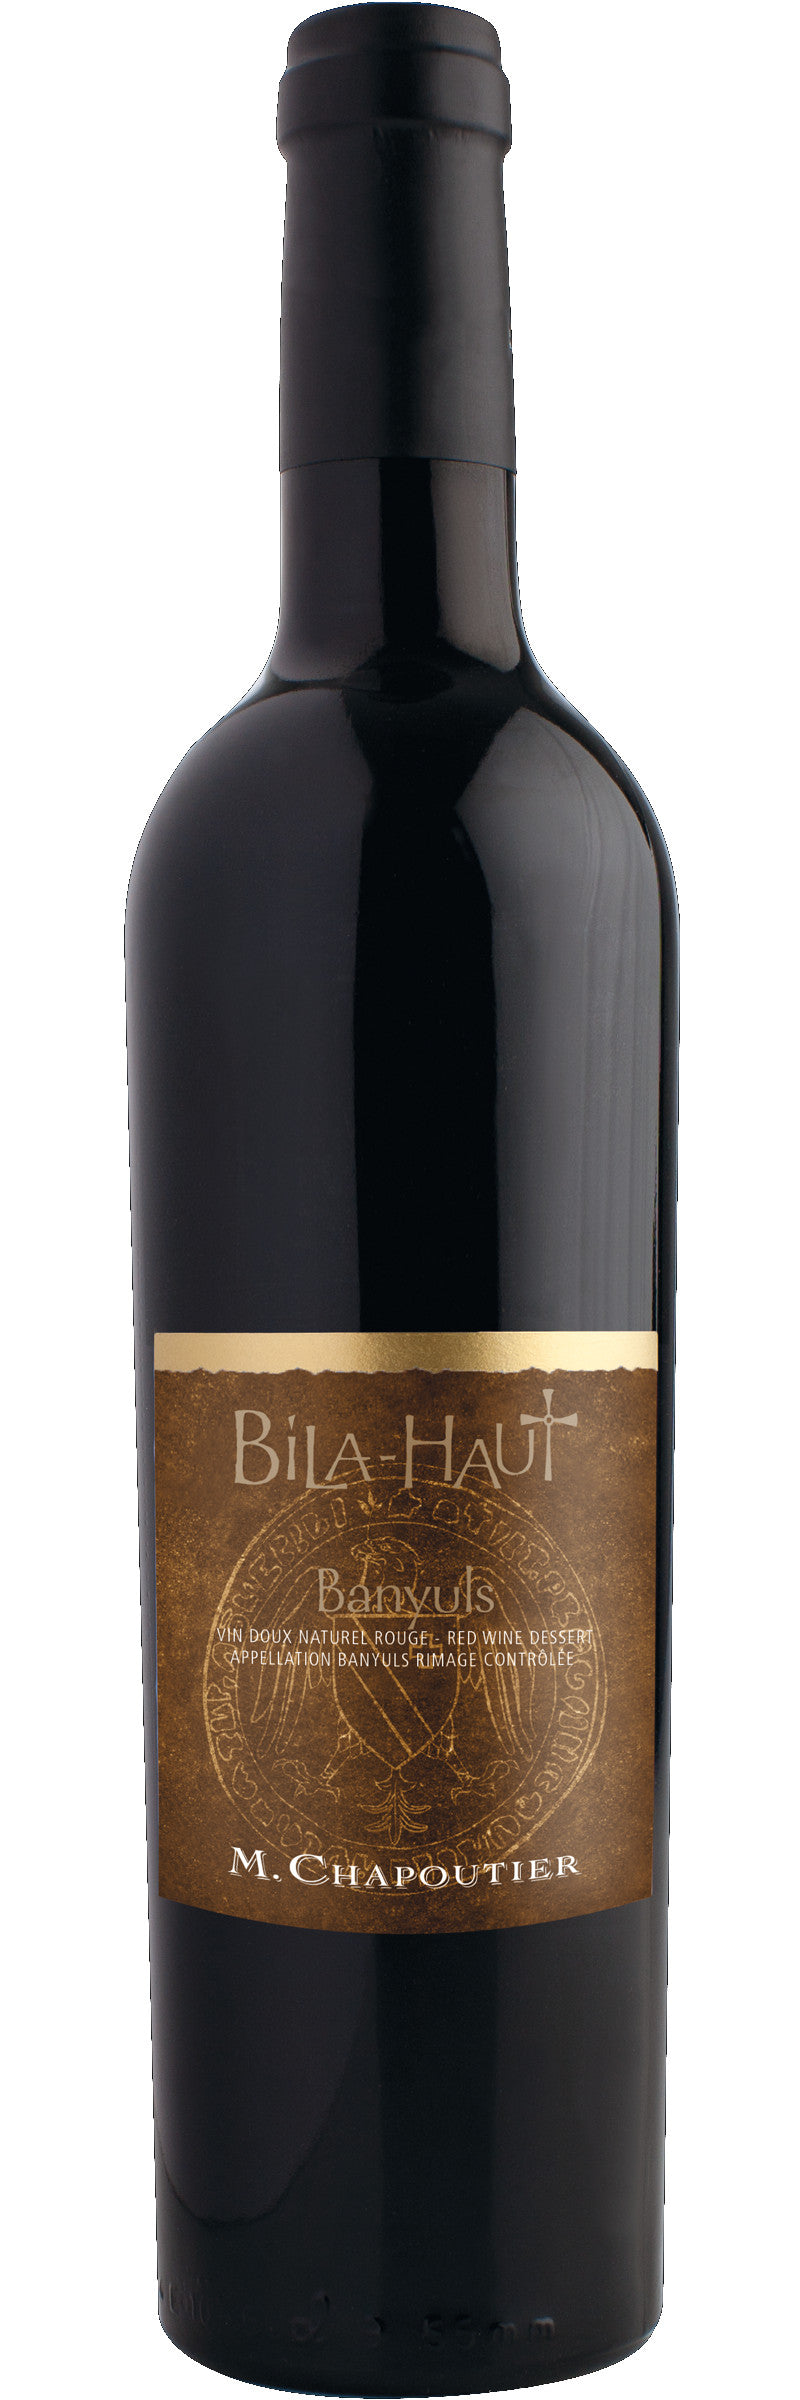 BILA-HAUT BANYULS VIN DOUX NATUREL - Vino Wines